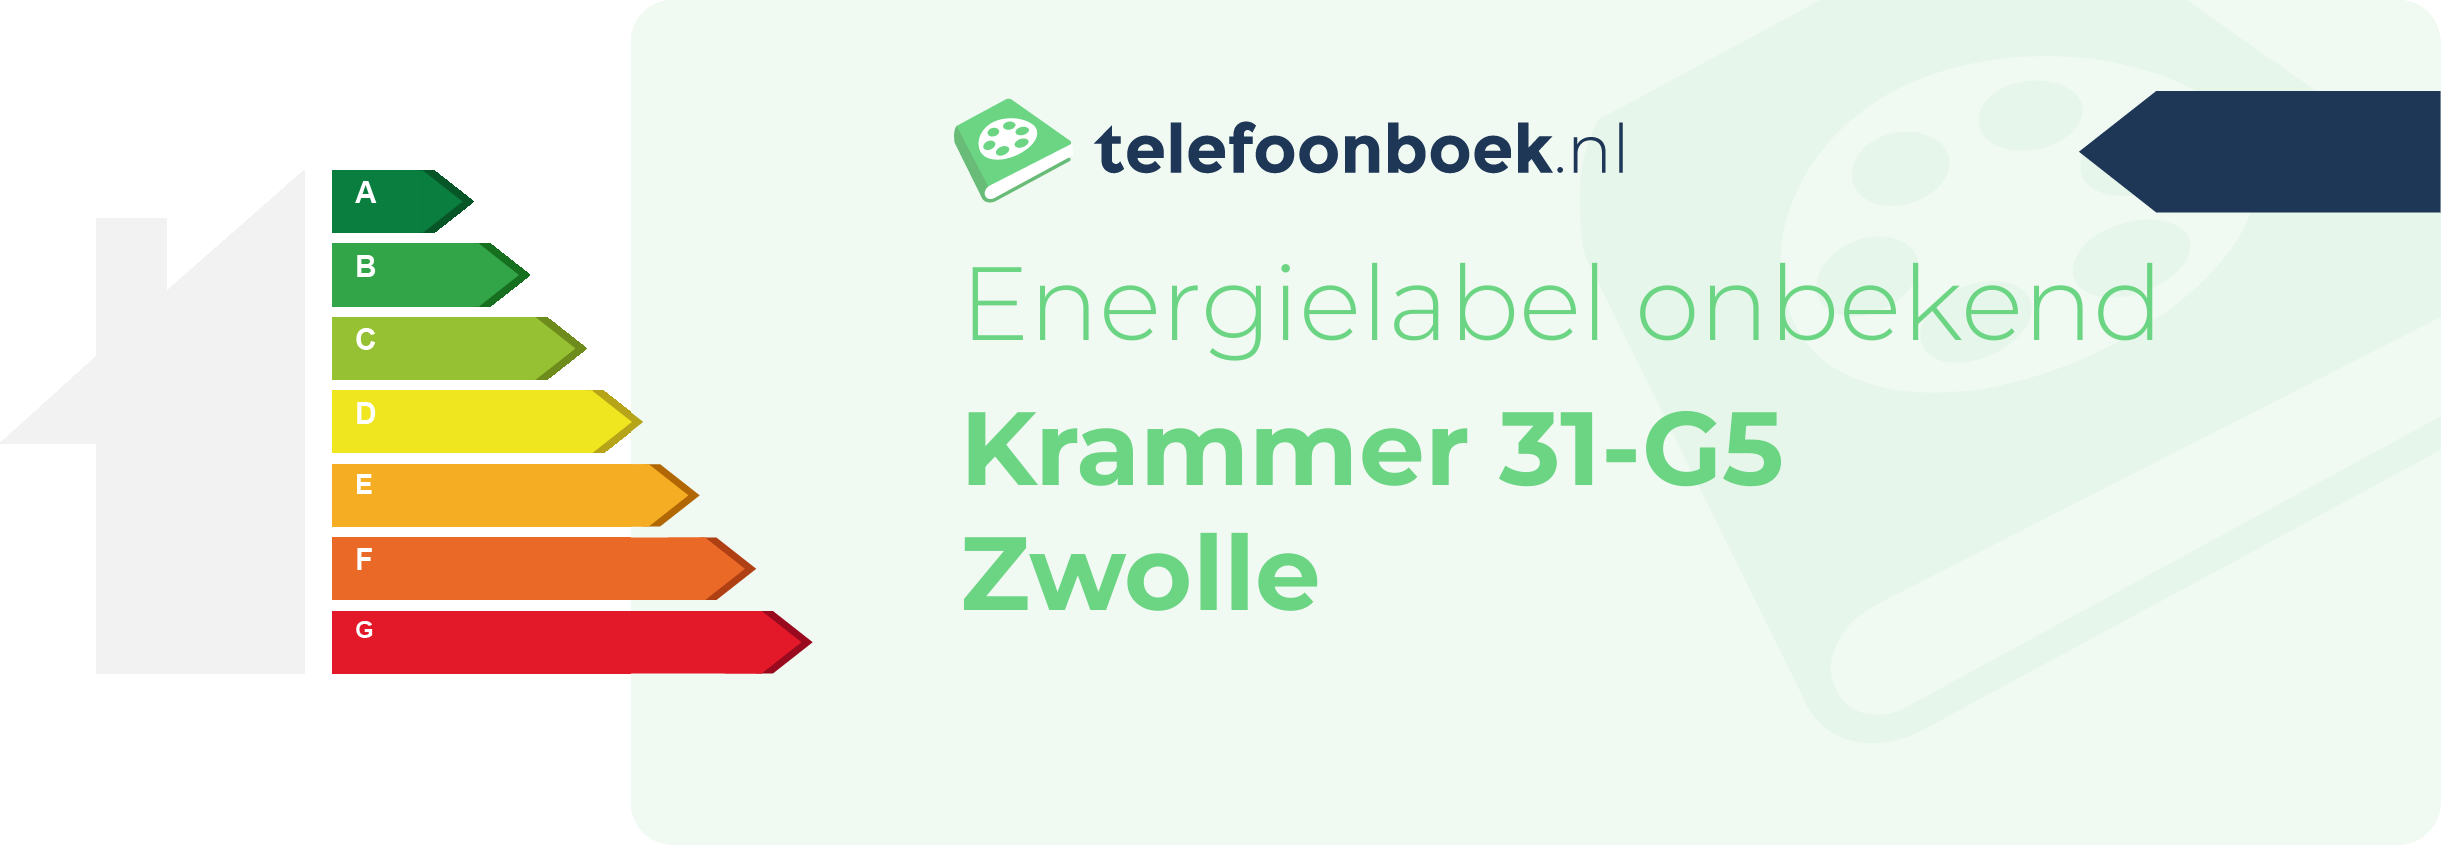 Energielabel Krammer 31-G5 Zwolle